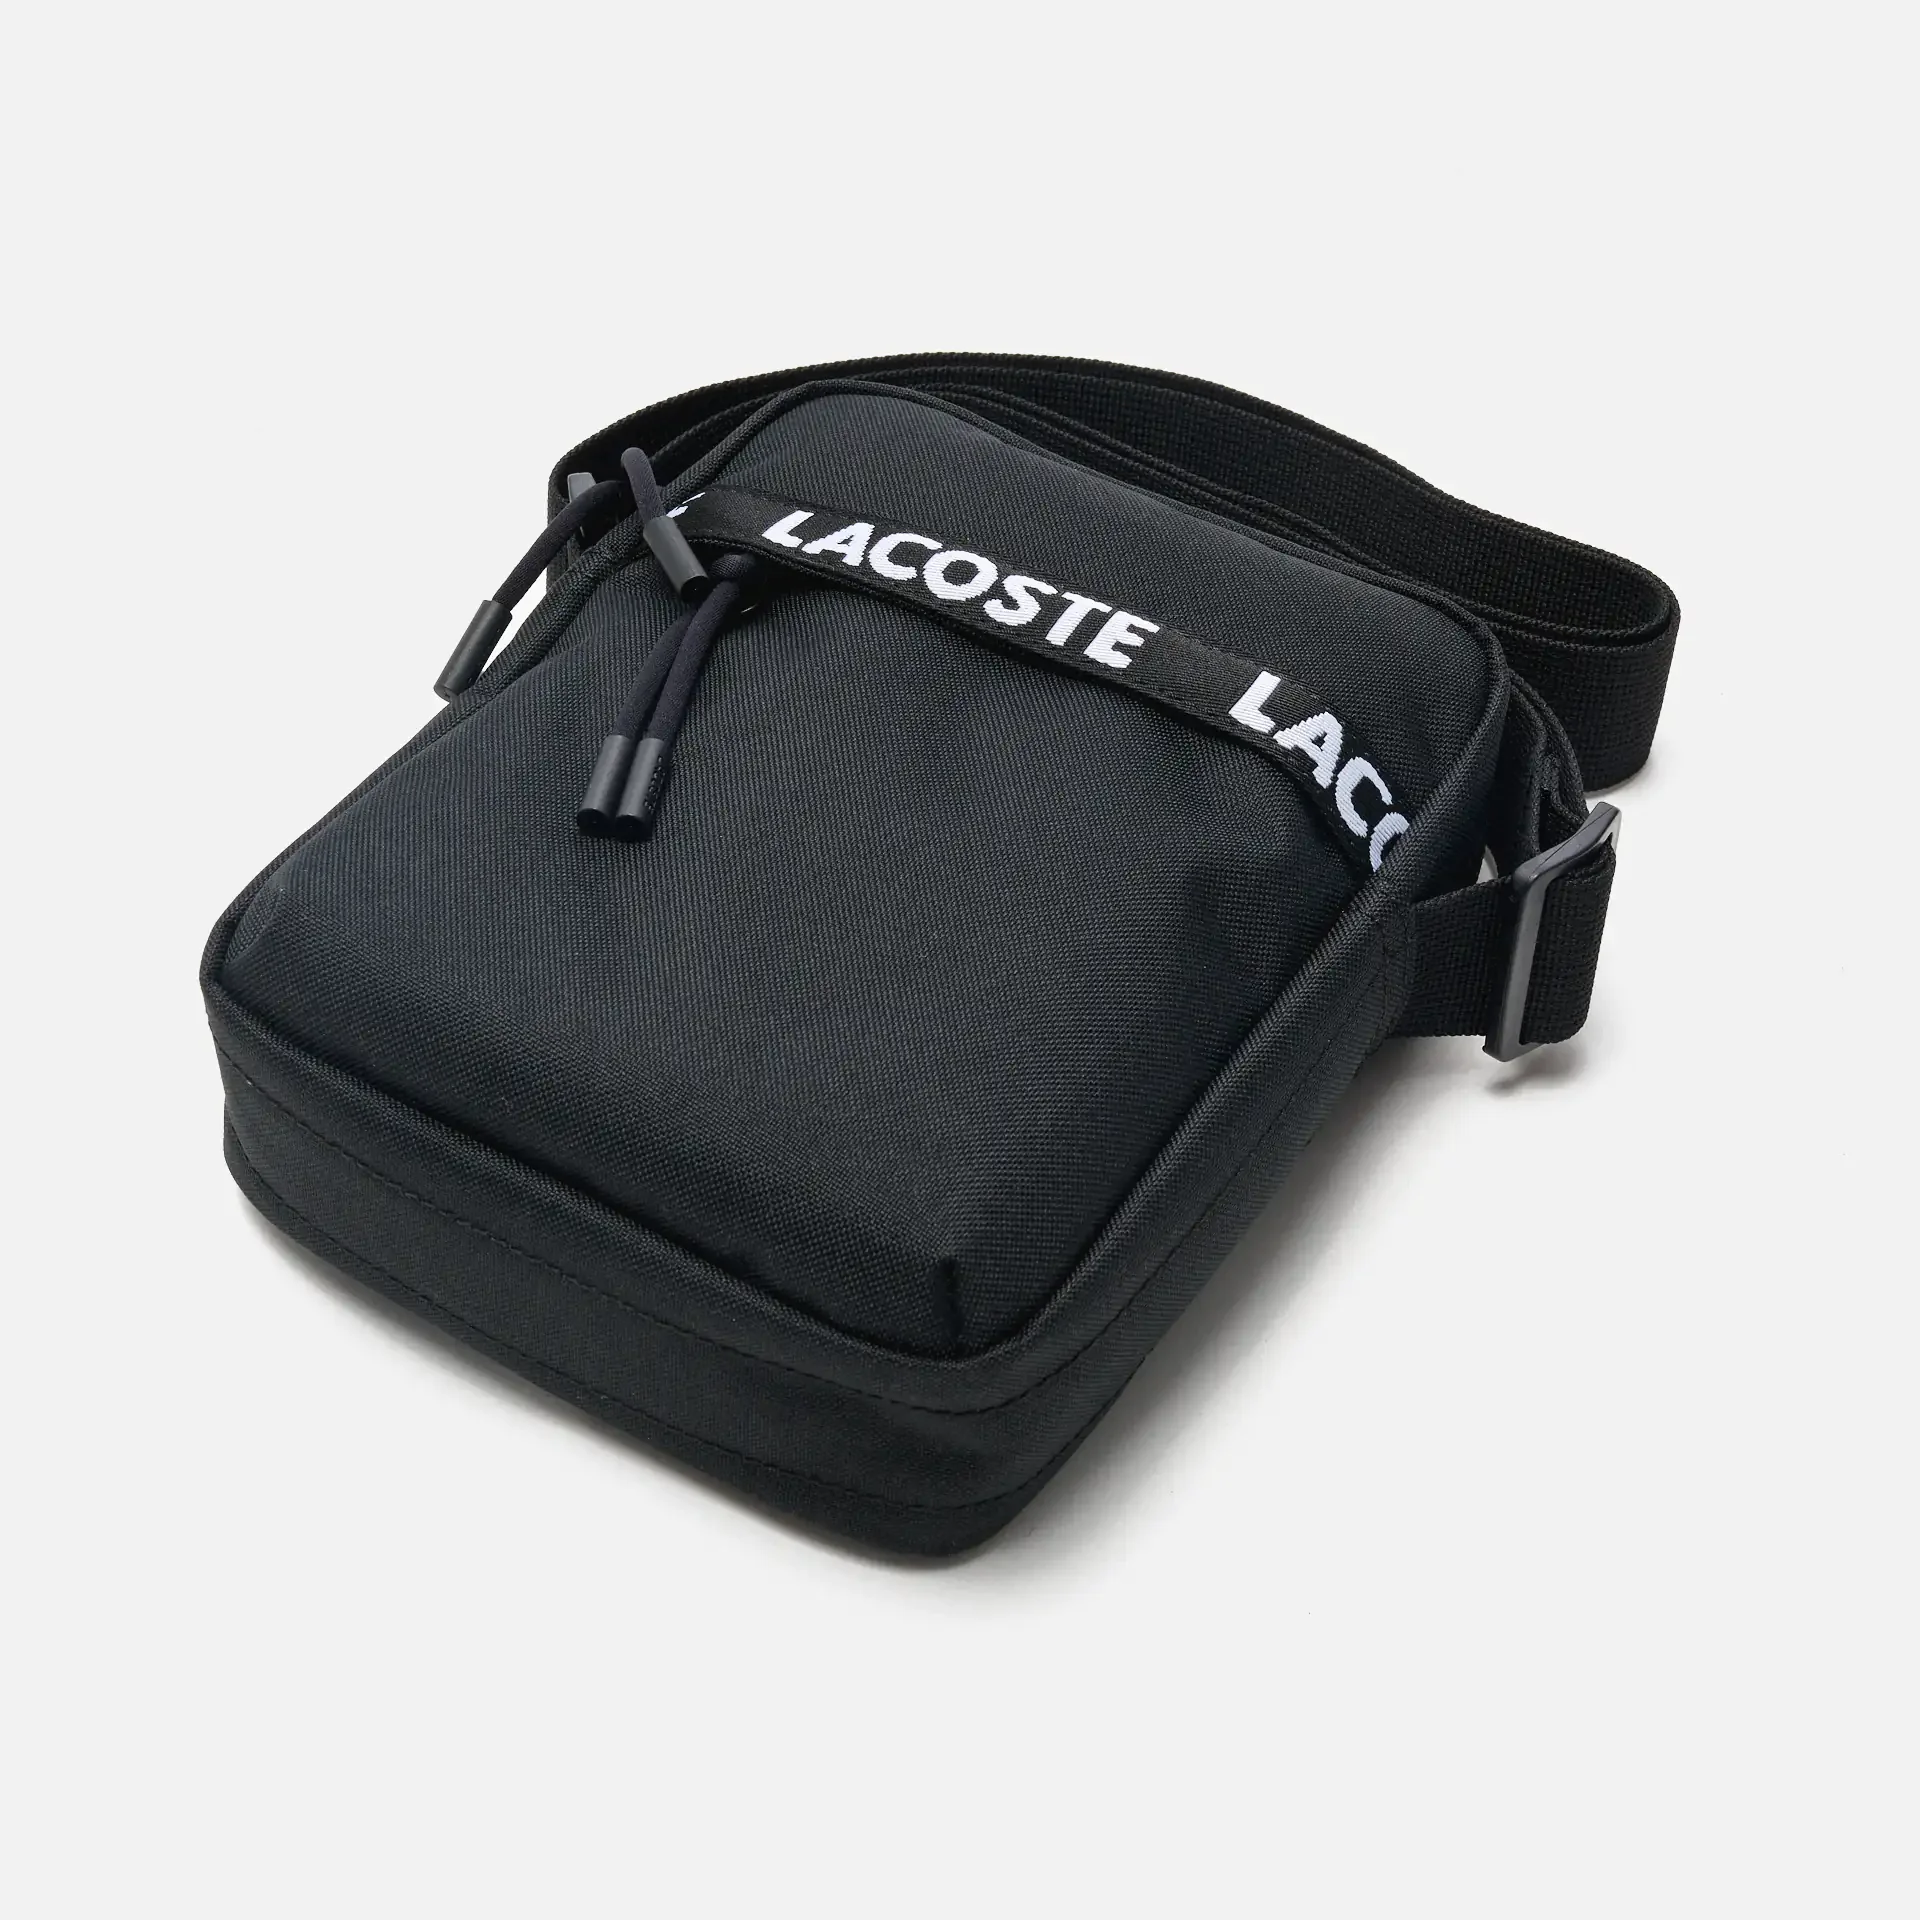  Lacoste Vertical Camera Bag Tape Noir